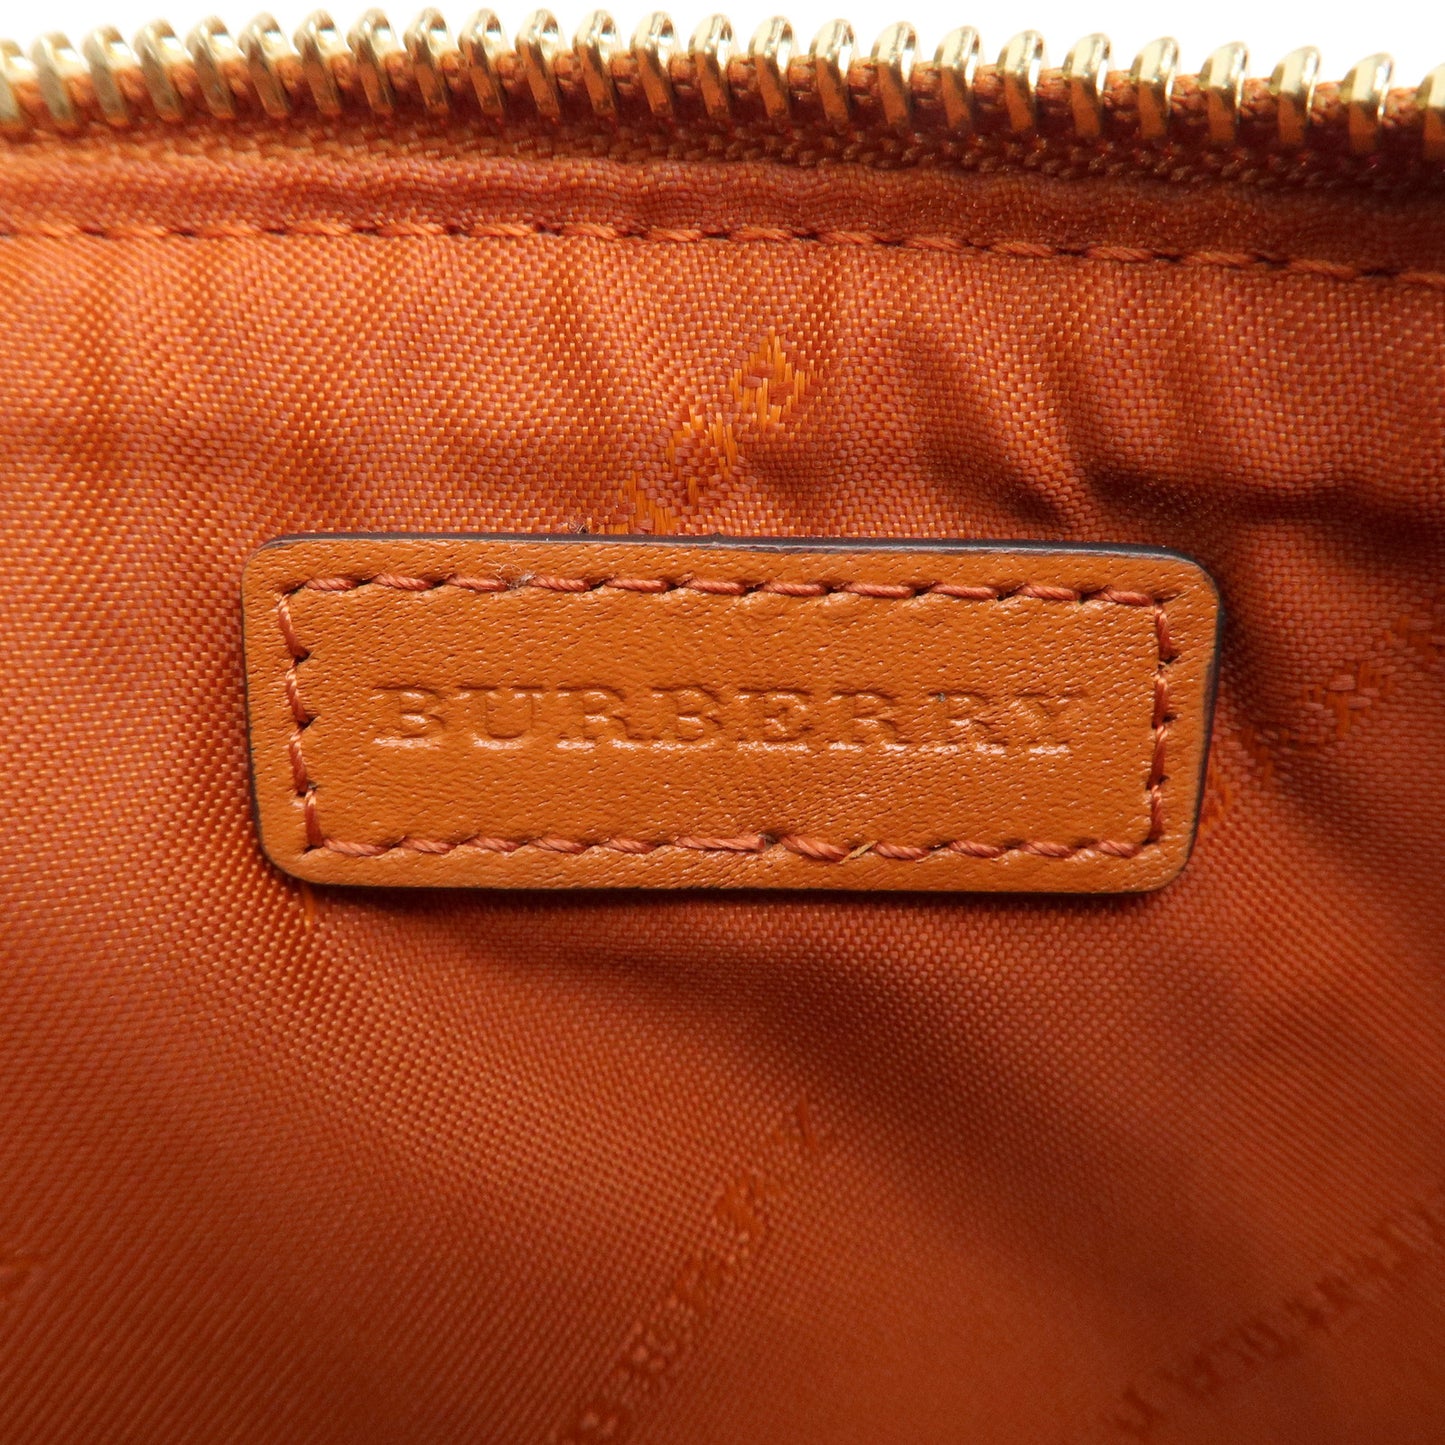 BURBERRY Nova Plaid PVC Leather Shoulder Bag Beige Orange 3888914